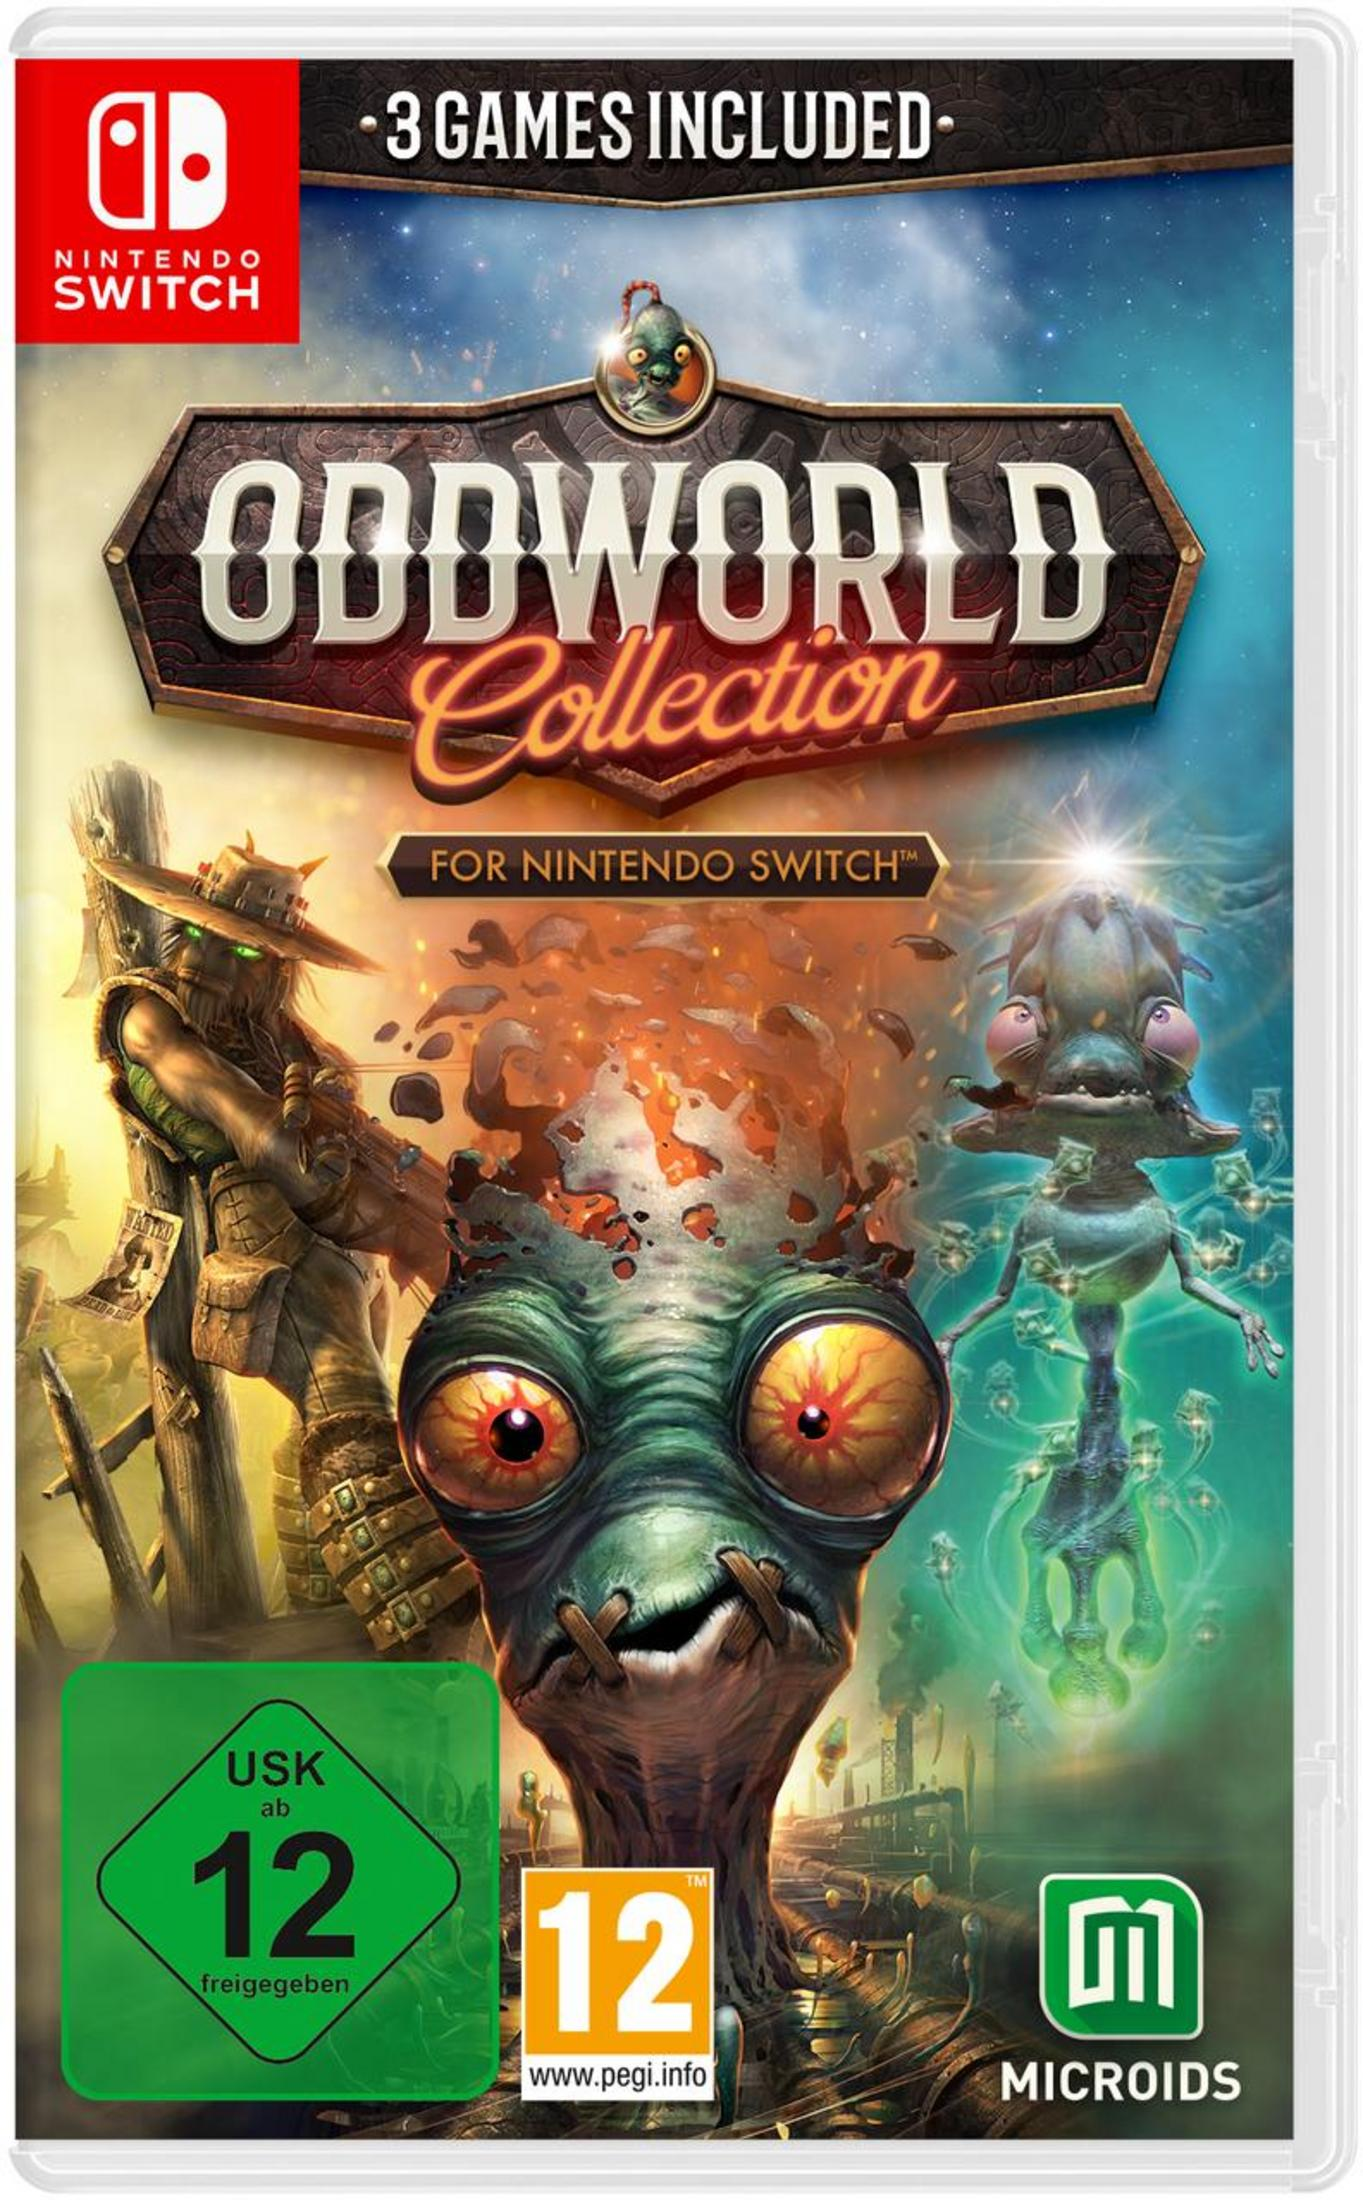 Switch Oddworld: [Nintendo - Switch] Collection